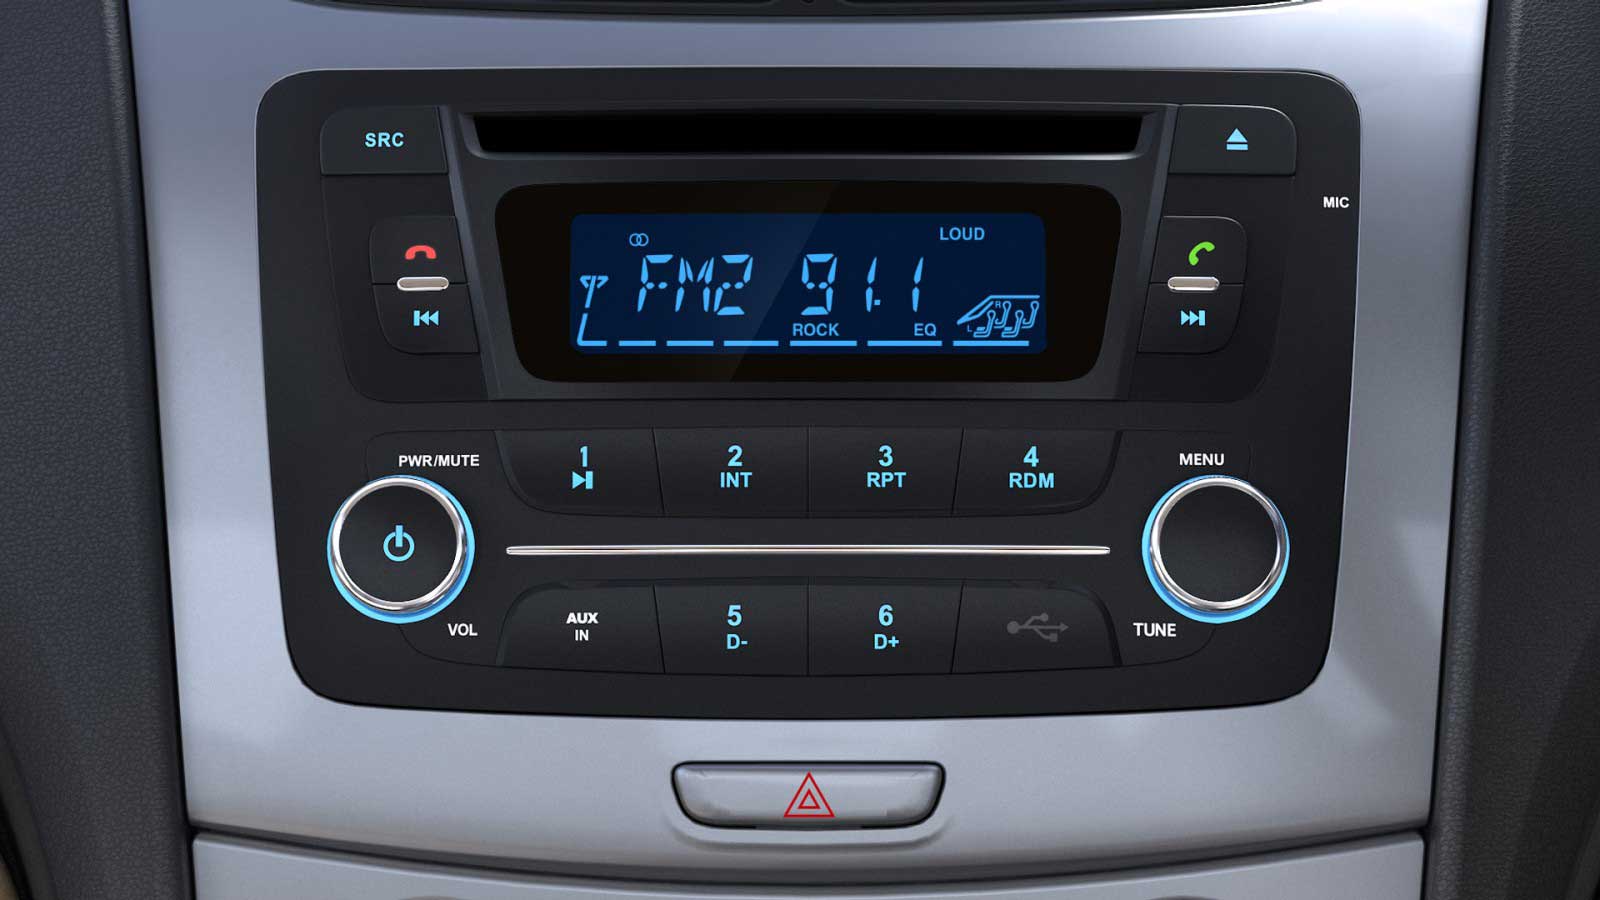 Chevrolet Sail 1.2 LT ABS Interior multimedia